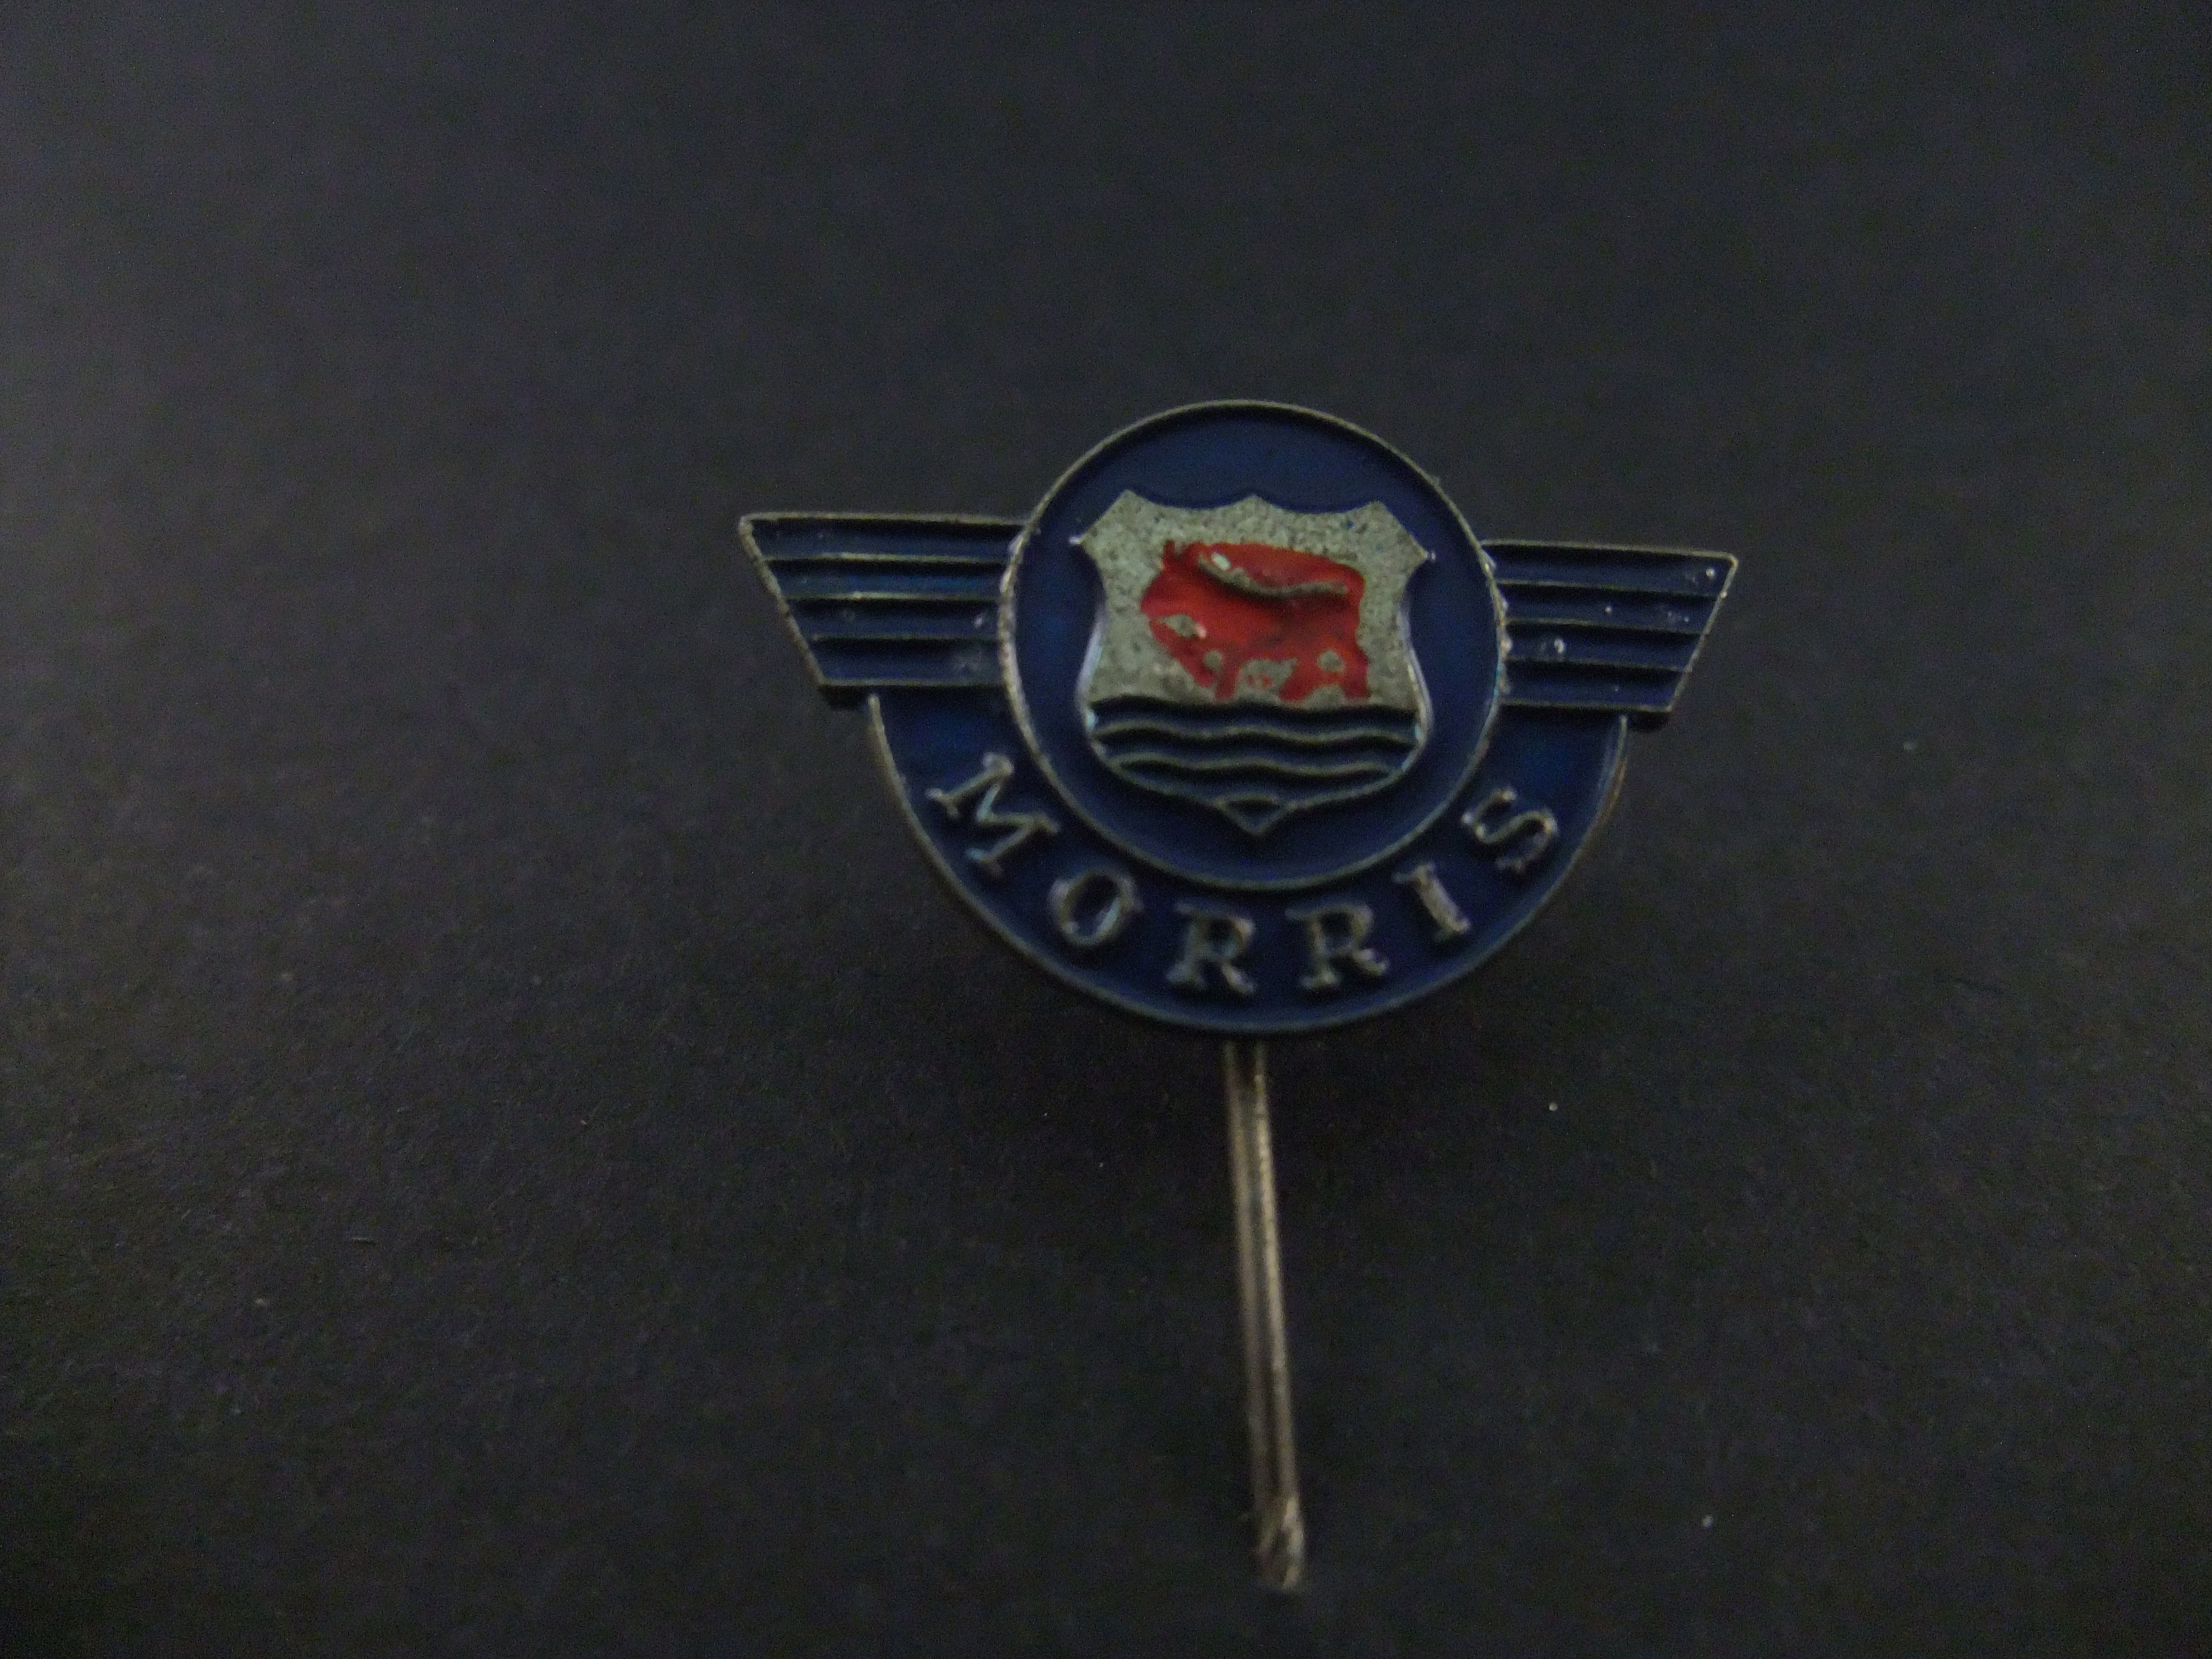 Austin Morris Brits automerk blauw logo zilverkleurig